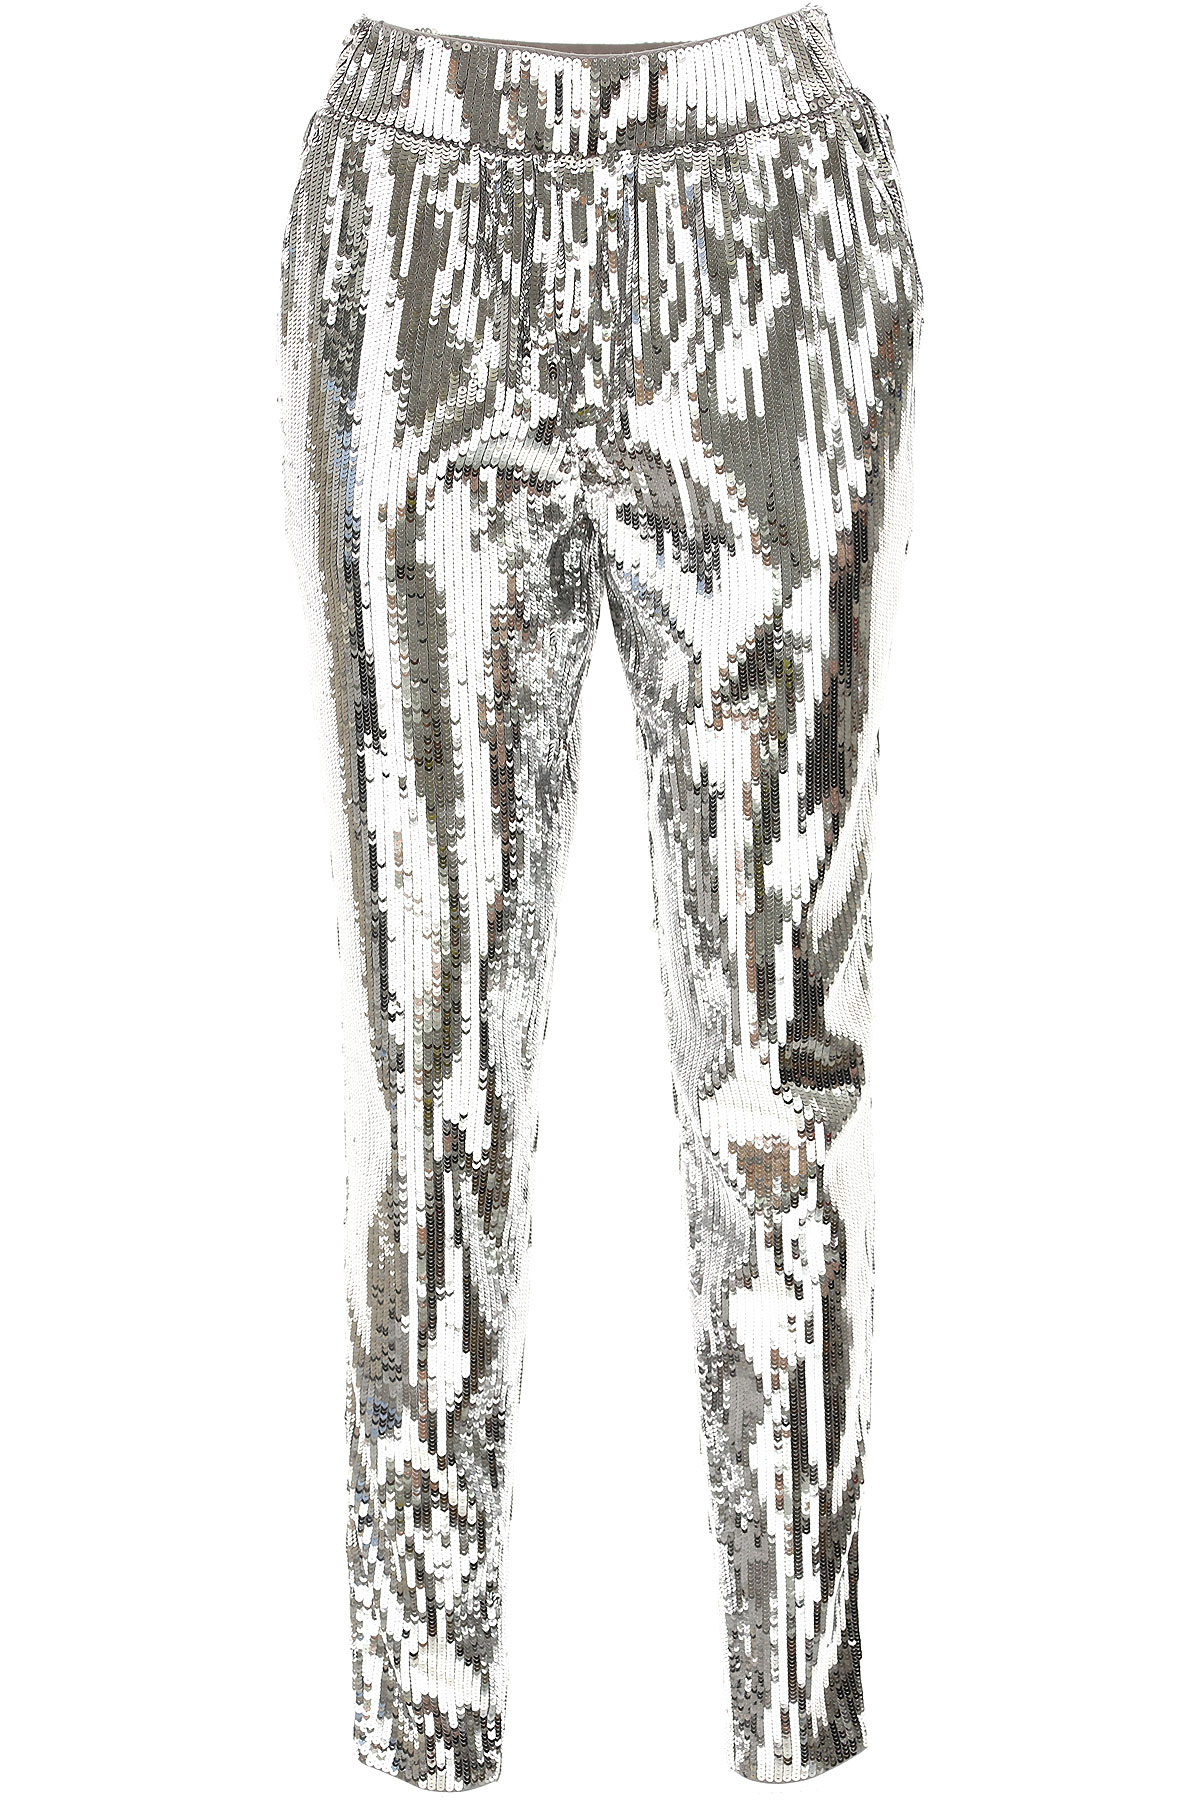 Michael Kors Pantalon Femme, Argent, Polyester, 2017, 38 40 42 44 46